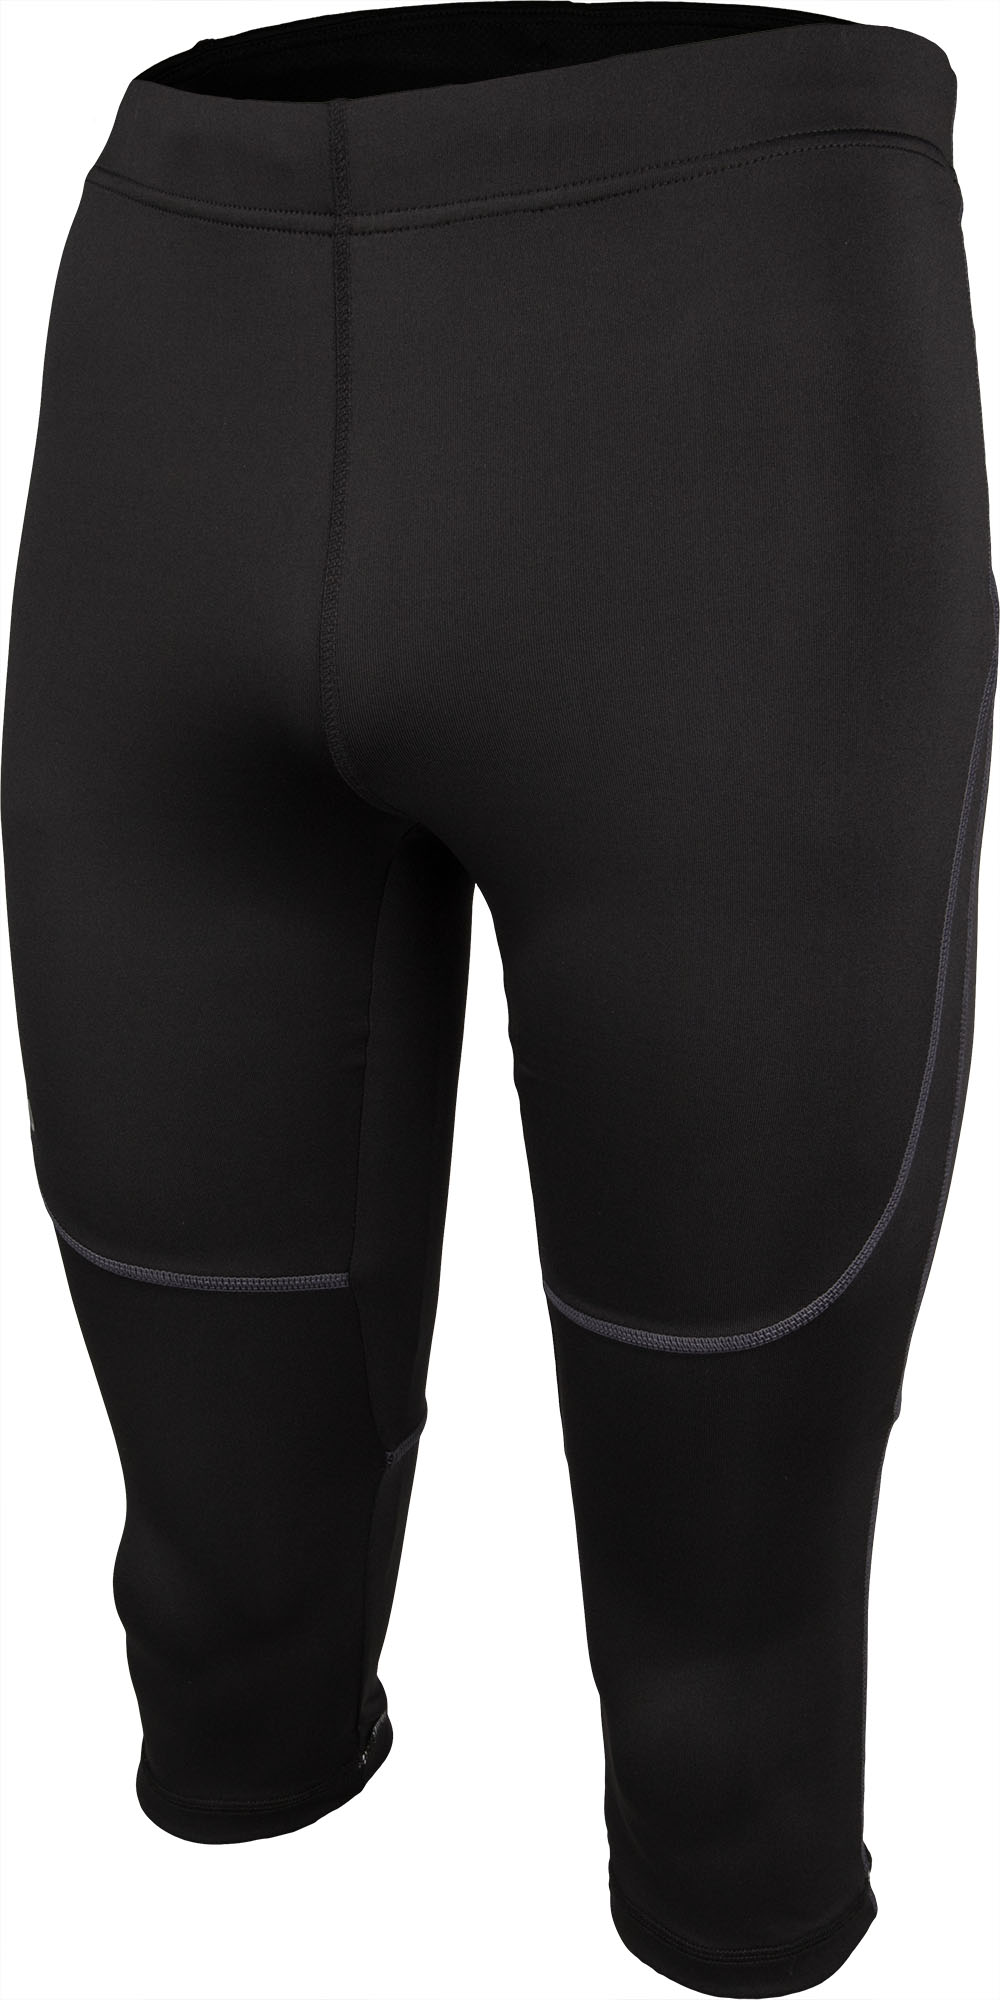 Men’s 3/4 length functional pants